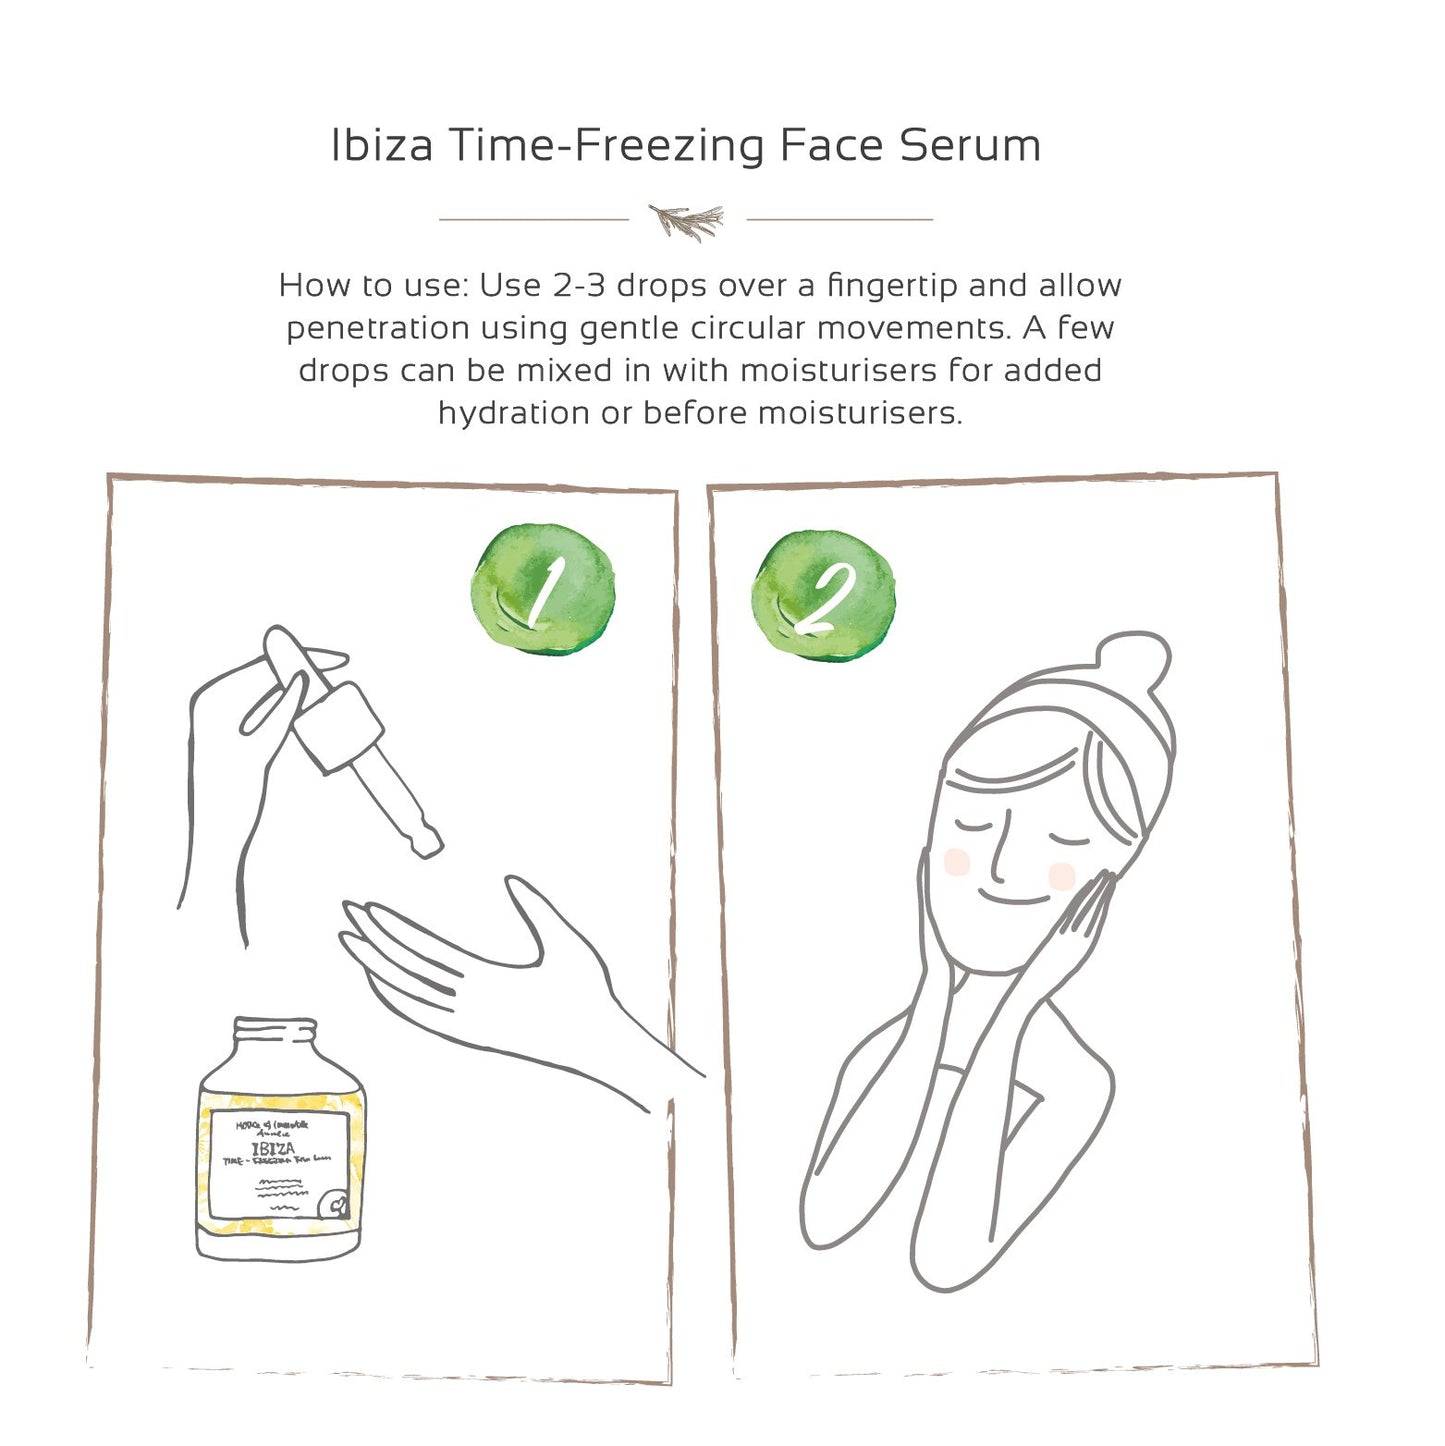 Ibiza Time-Freezing Face Serum